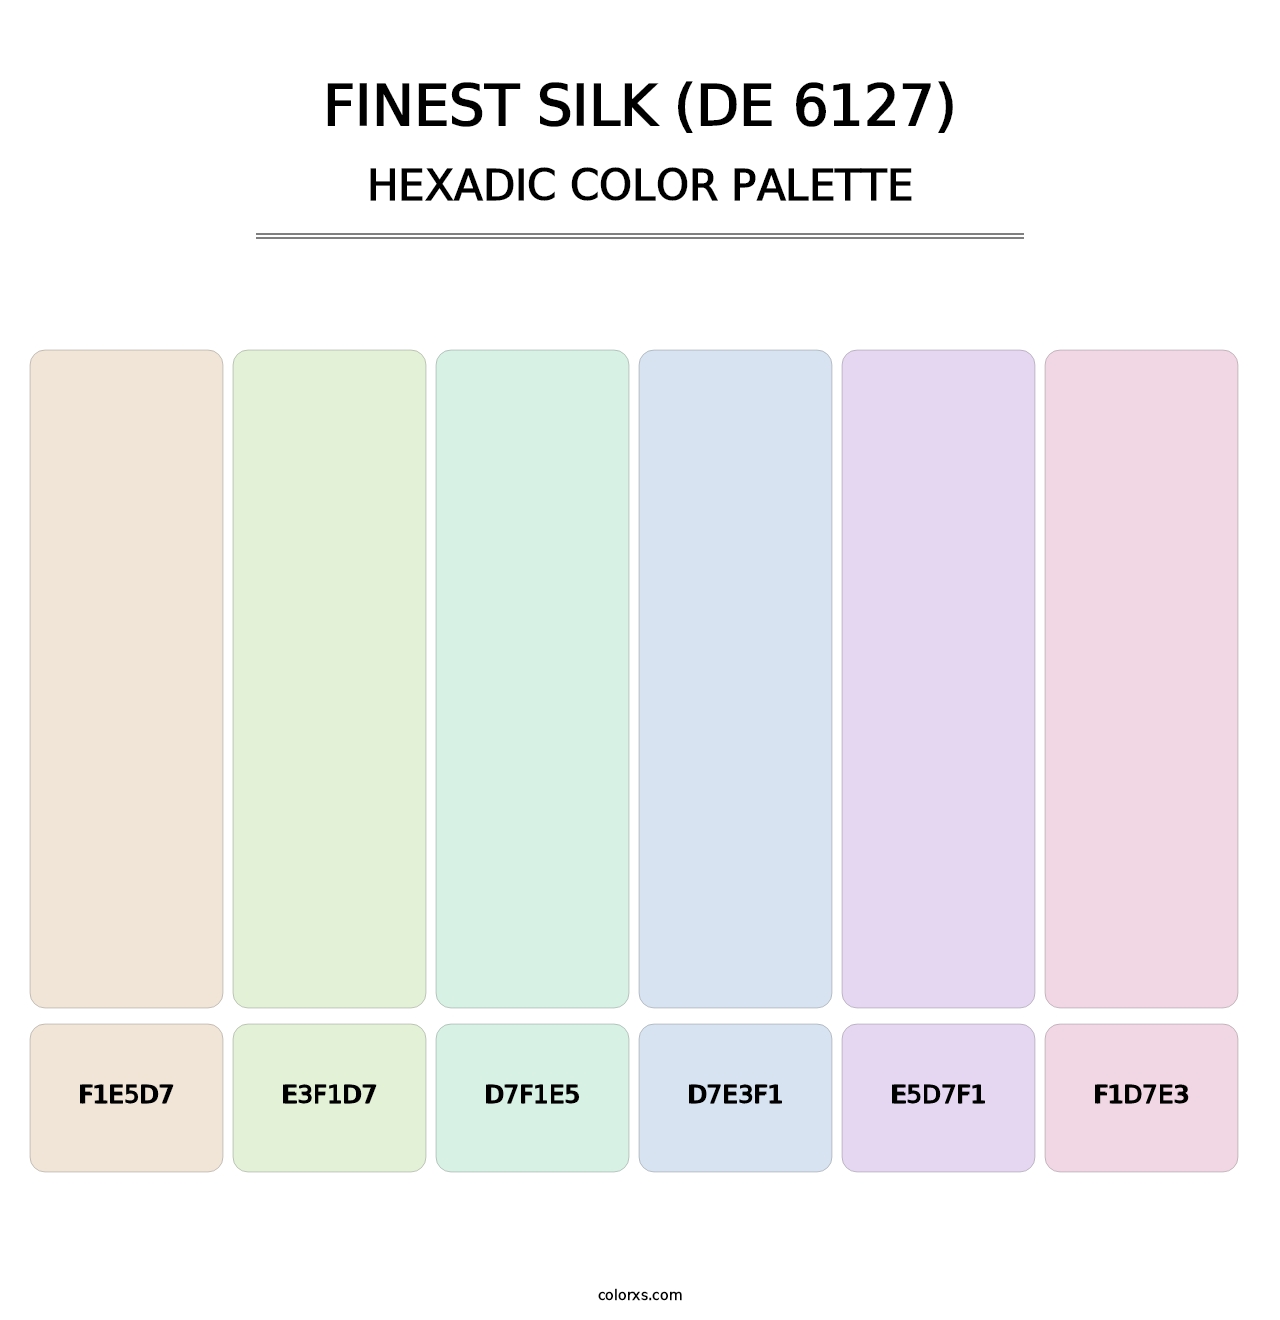 Finest Silk (DE 6127) - Hexadic Color Palette